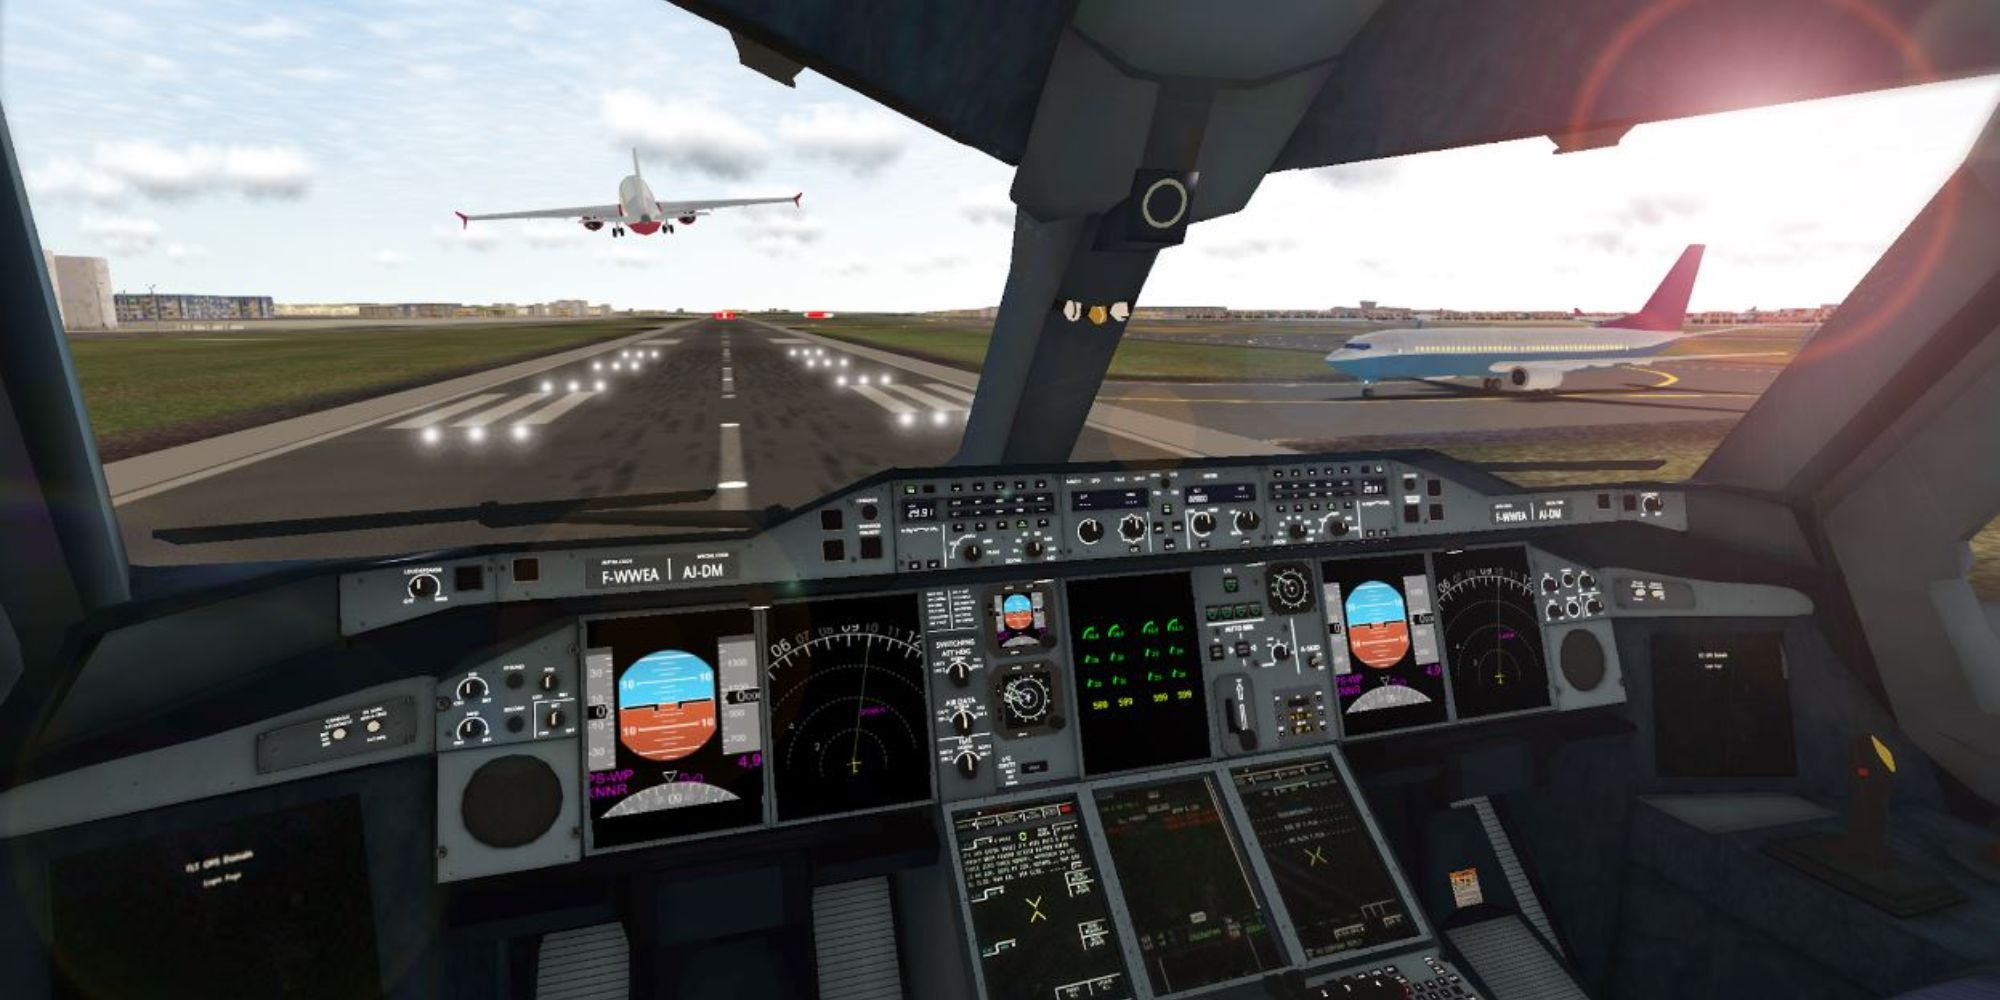 Best Mobile Simulation Games Real Flight Simulator view inside the cockpit